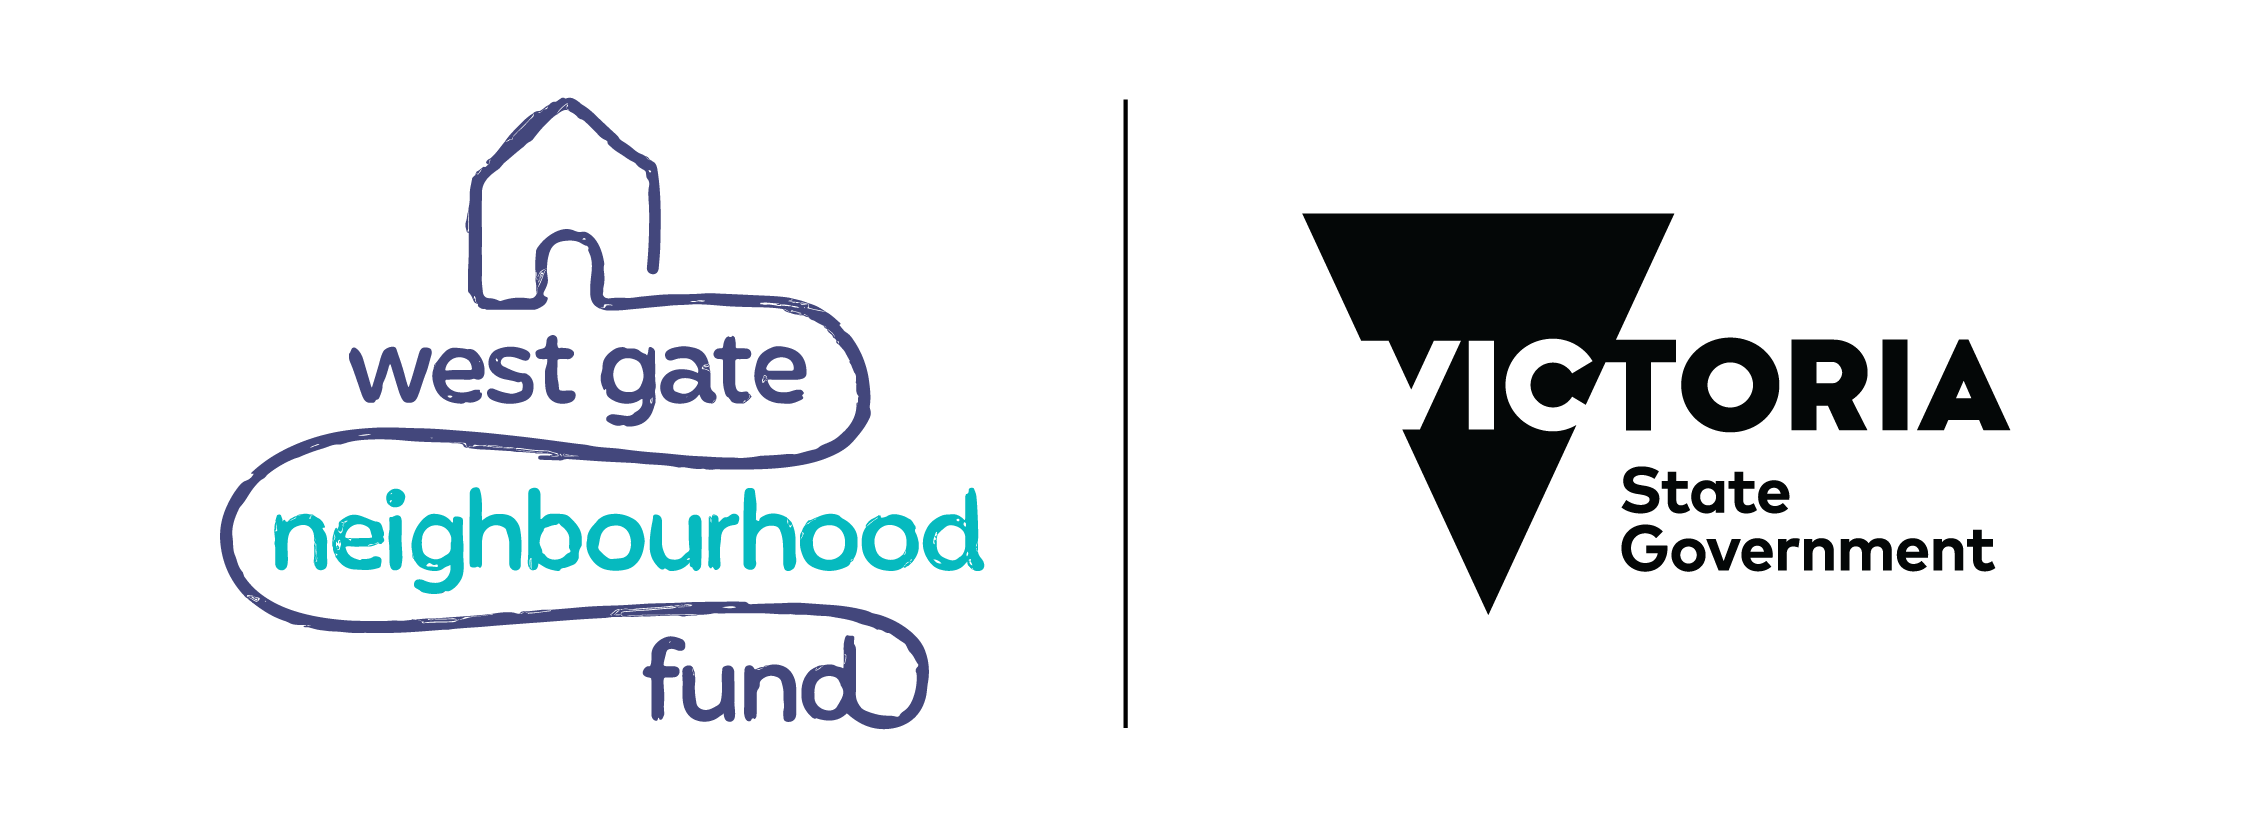 Victoria State Government - West Gate Neighbourhood Fund